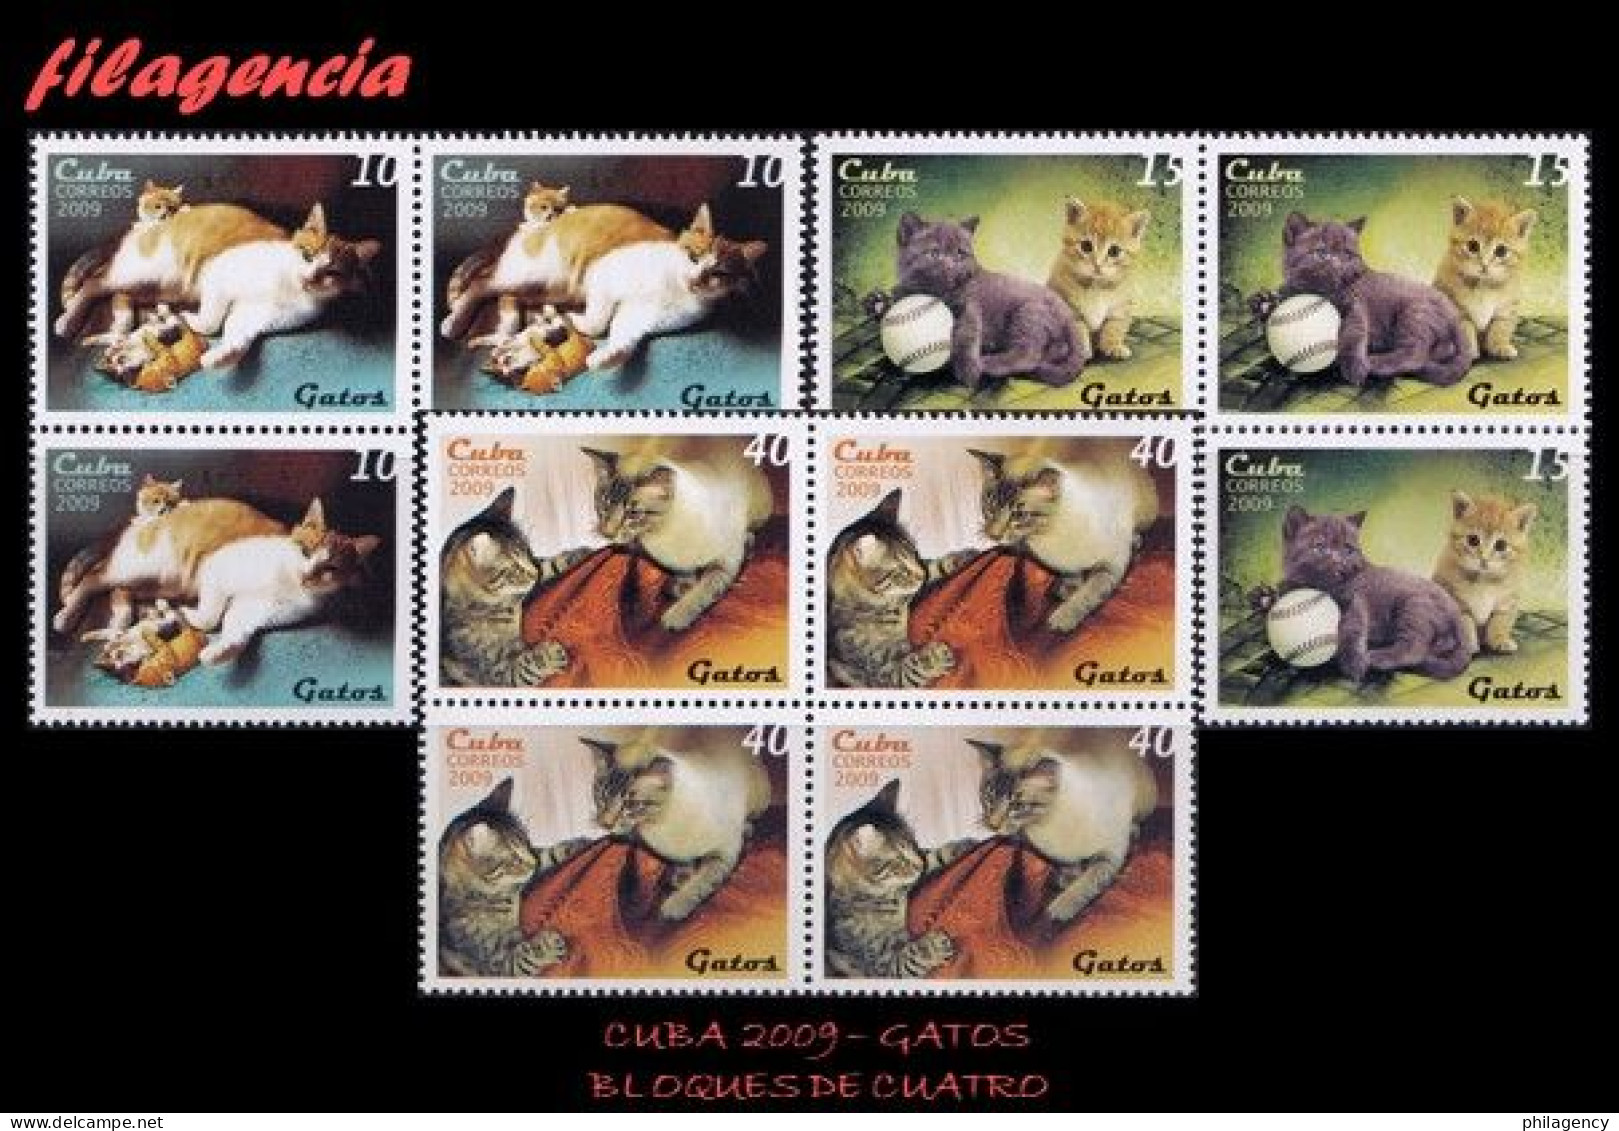 CUBA. BLOQUES DE CUATRO. 2009-13 FAUNA. GATOS - Unused Stamps